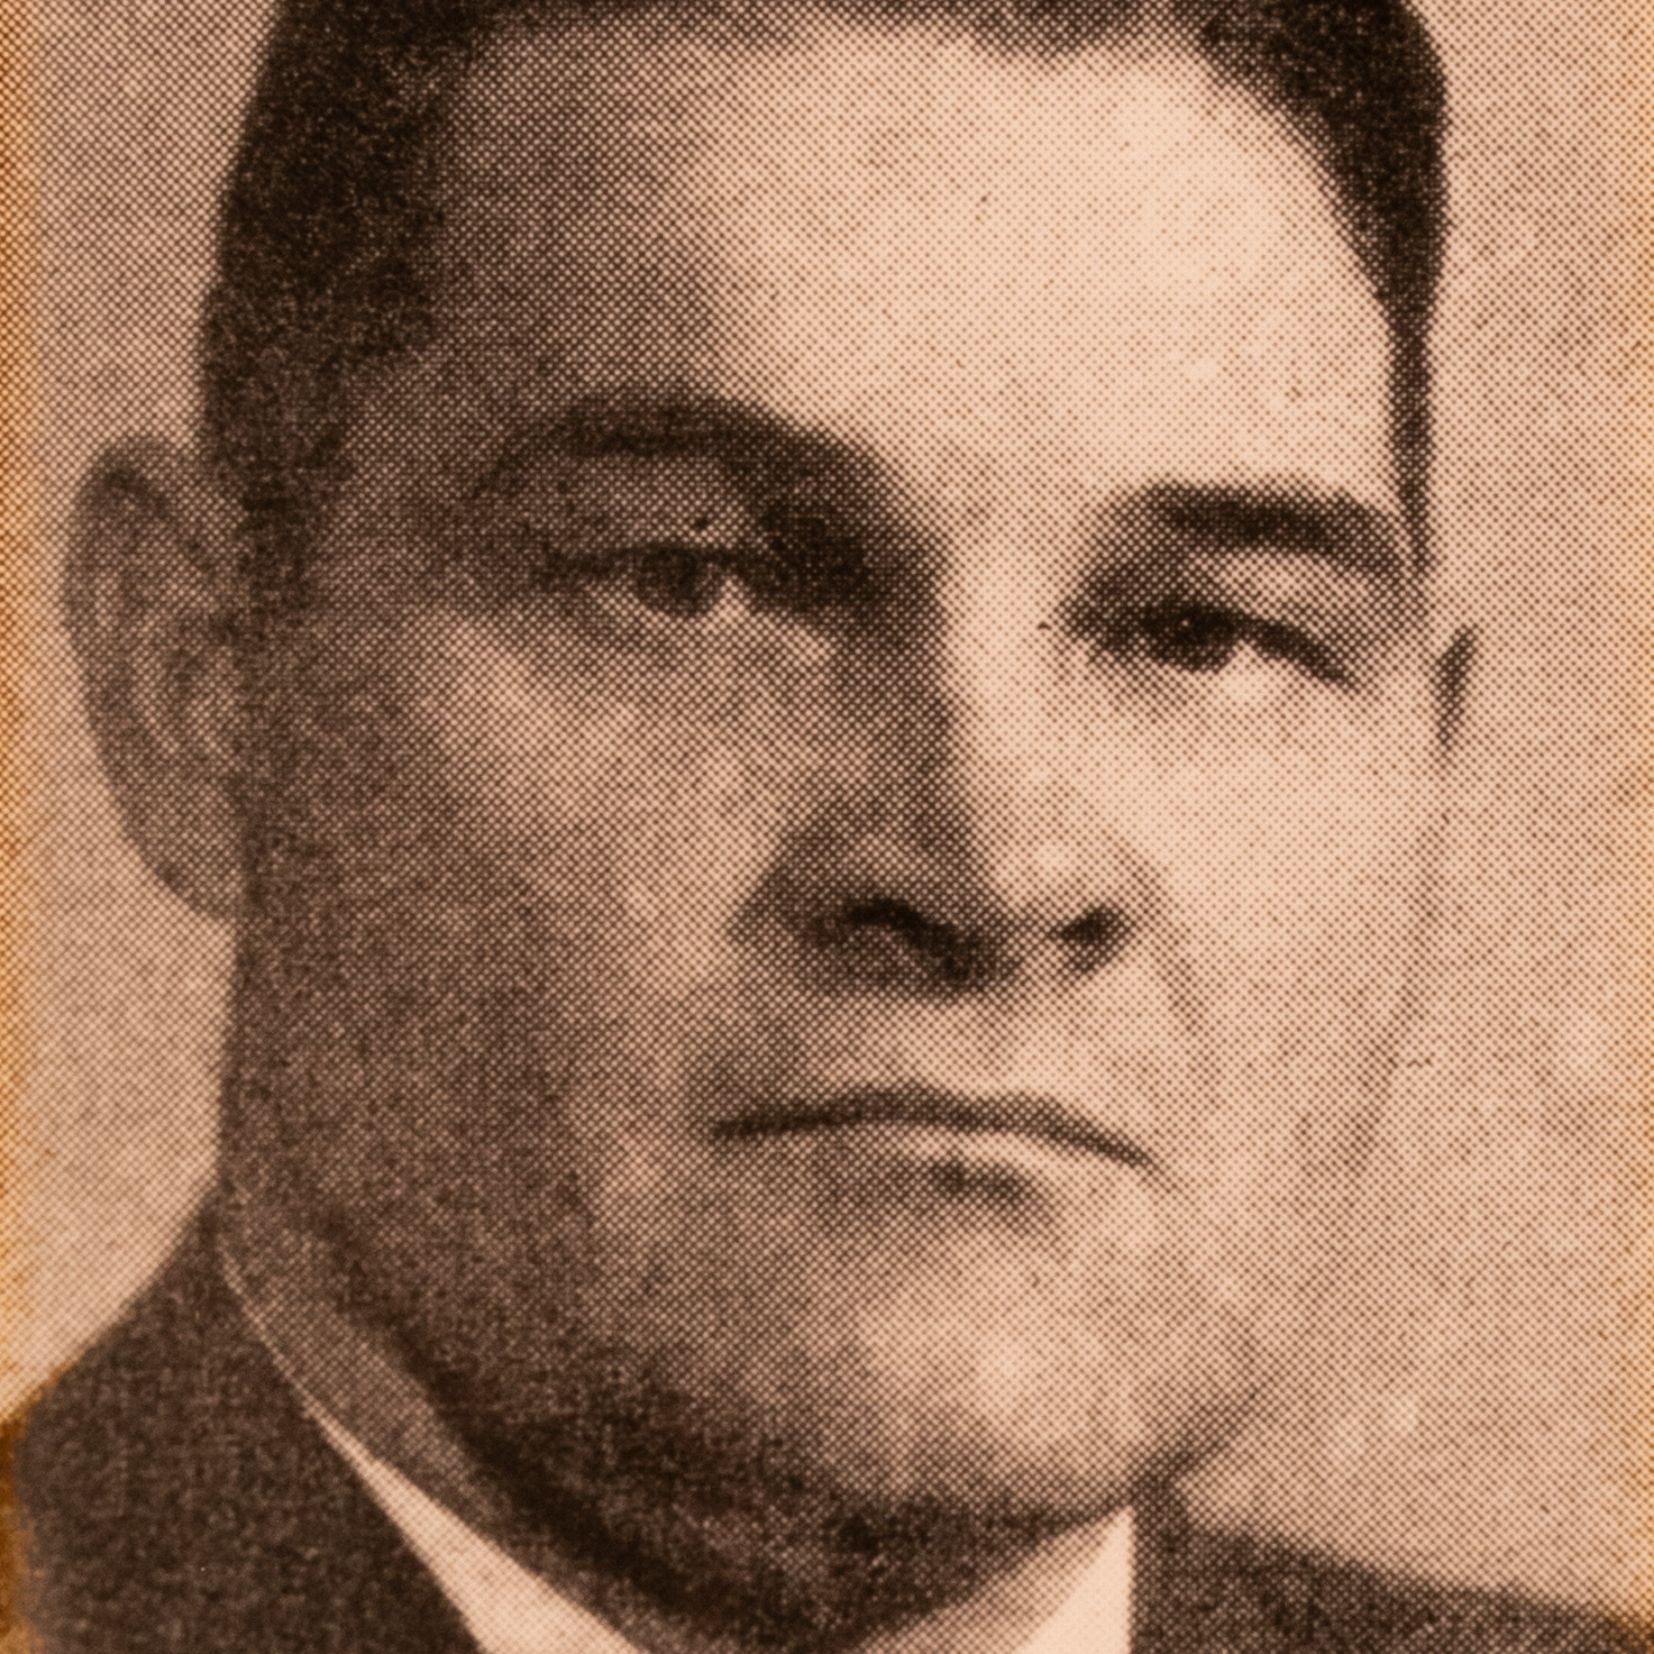 Mayor L. Carlos Coates